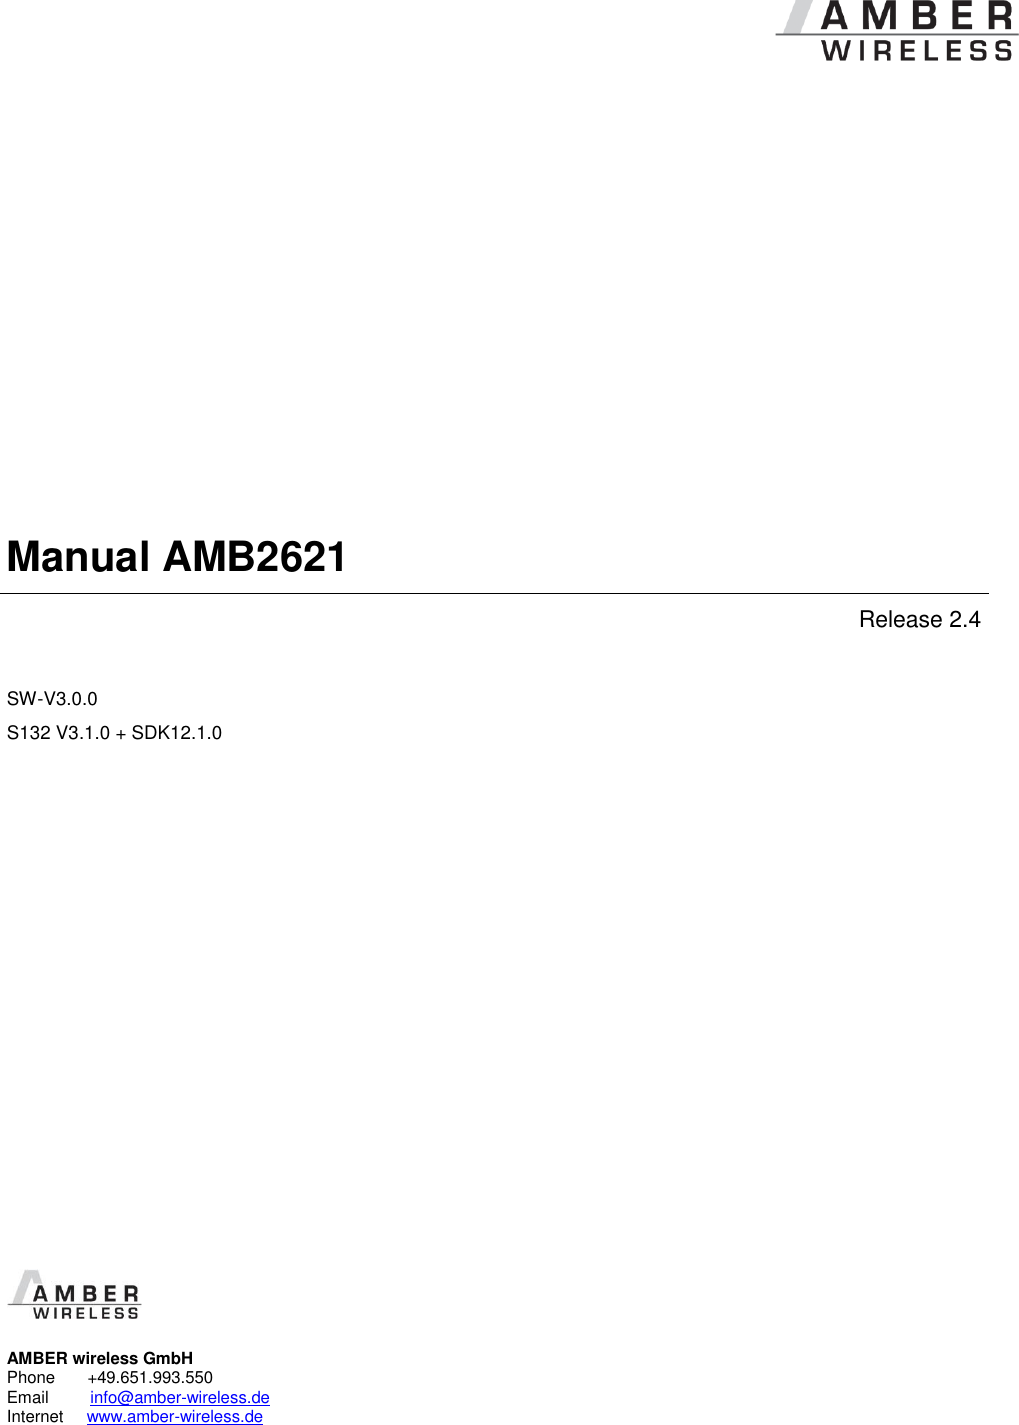            Manual AMB2621 Release 2.4 SW-V3.0.0 S132 V3.1.0 + SDK12.1.0                   AMBER wireless GmbH Phone       +49.651.993.550  Email         info@amber-wireless.de Internet     www.amber-wireless.de   